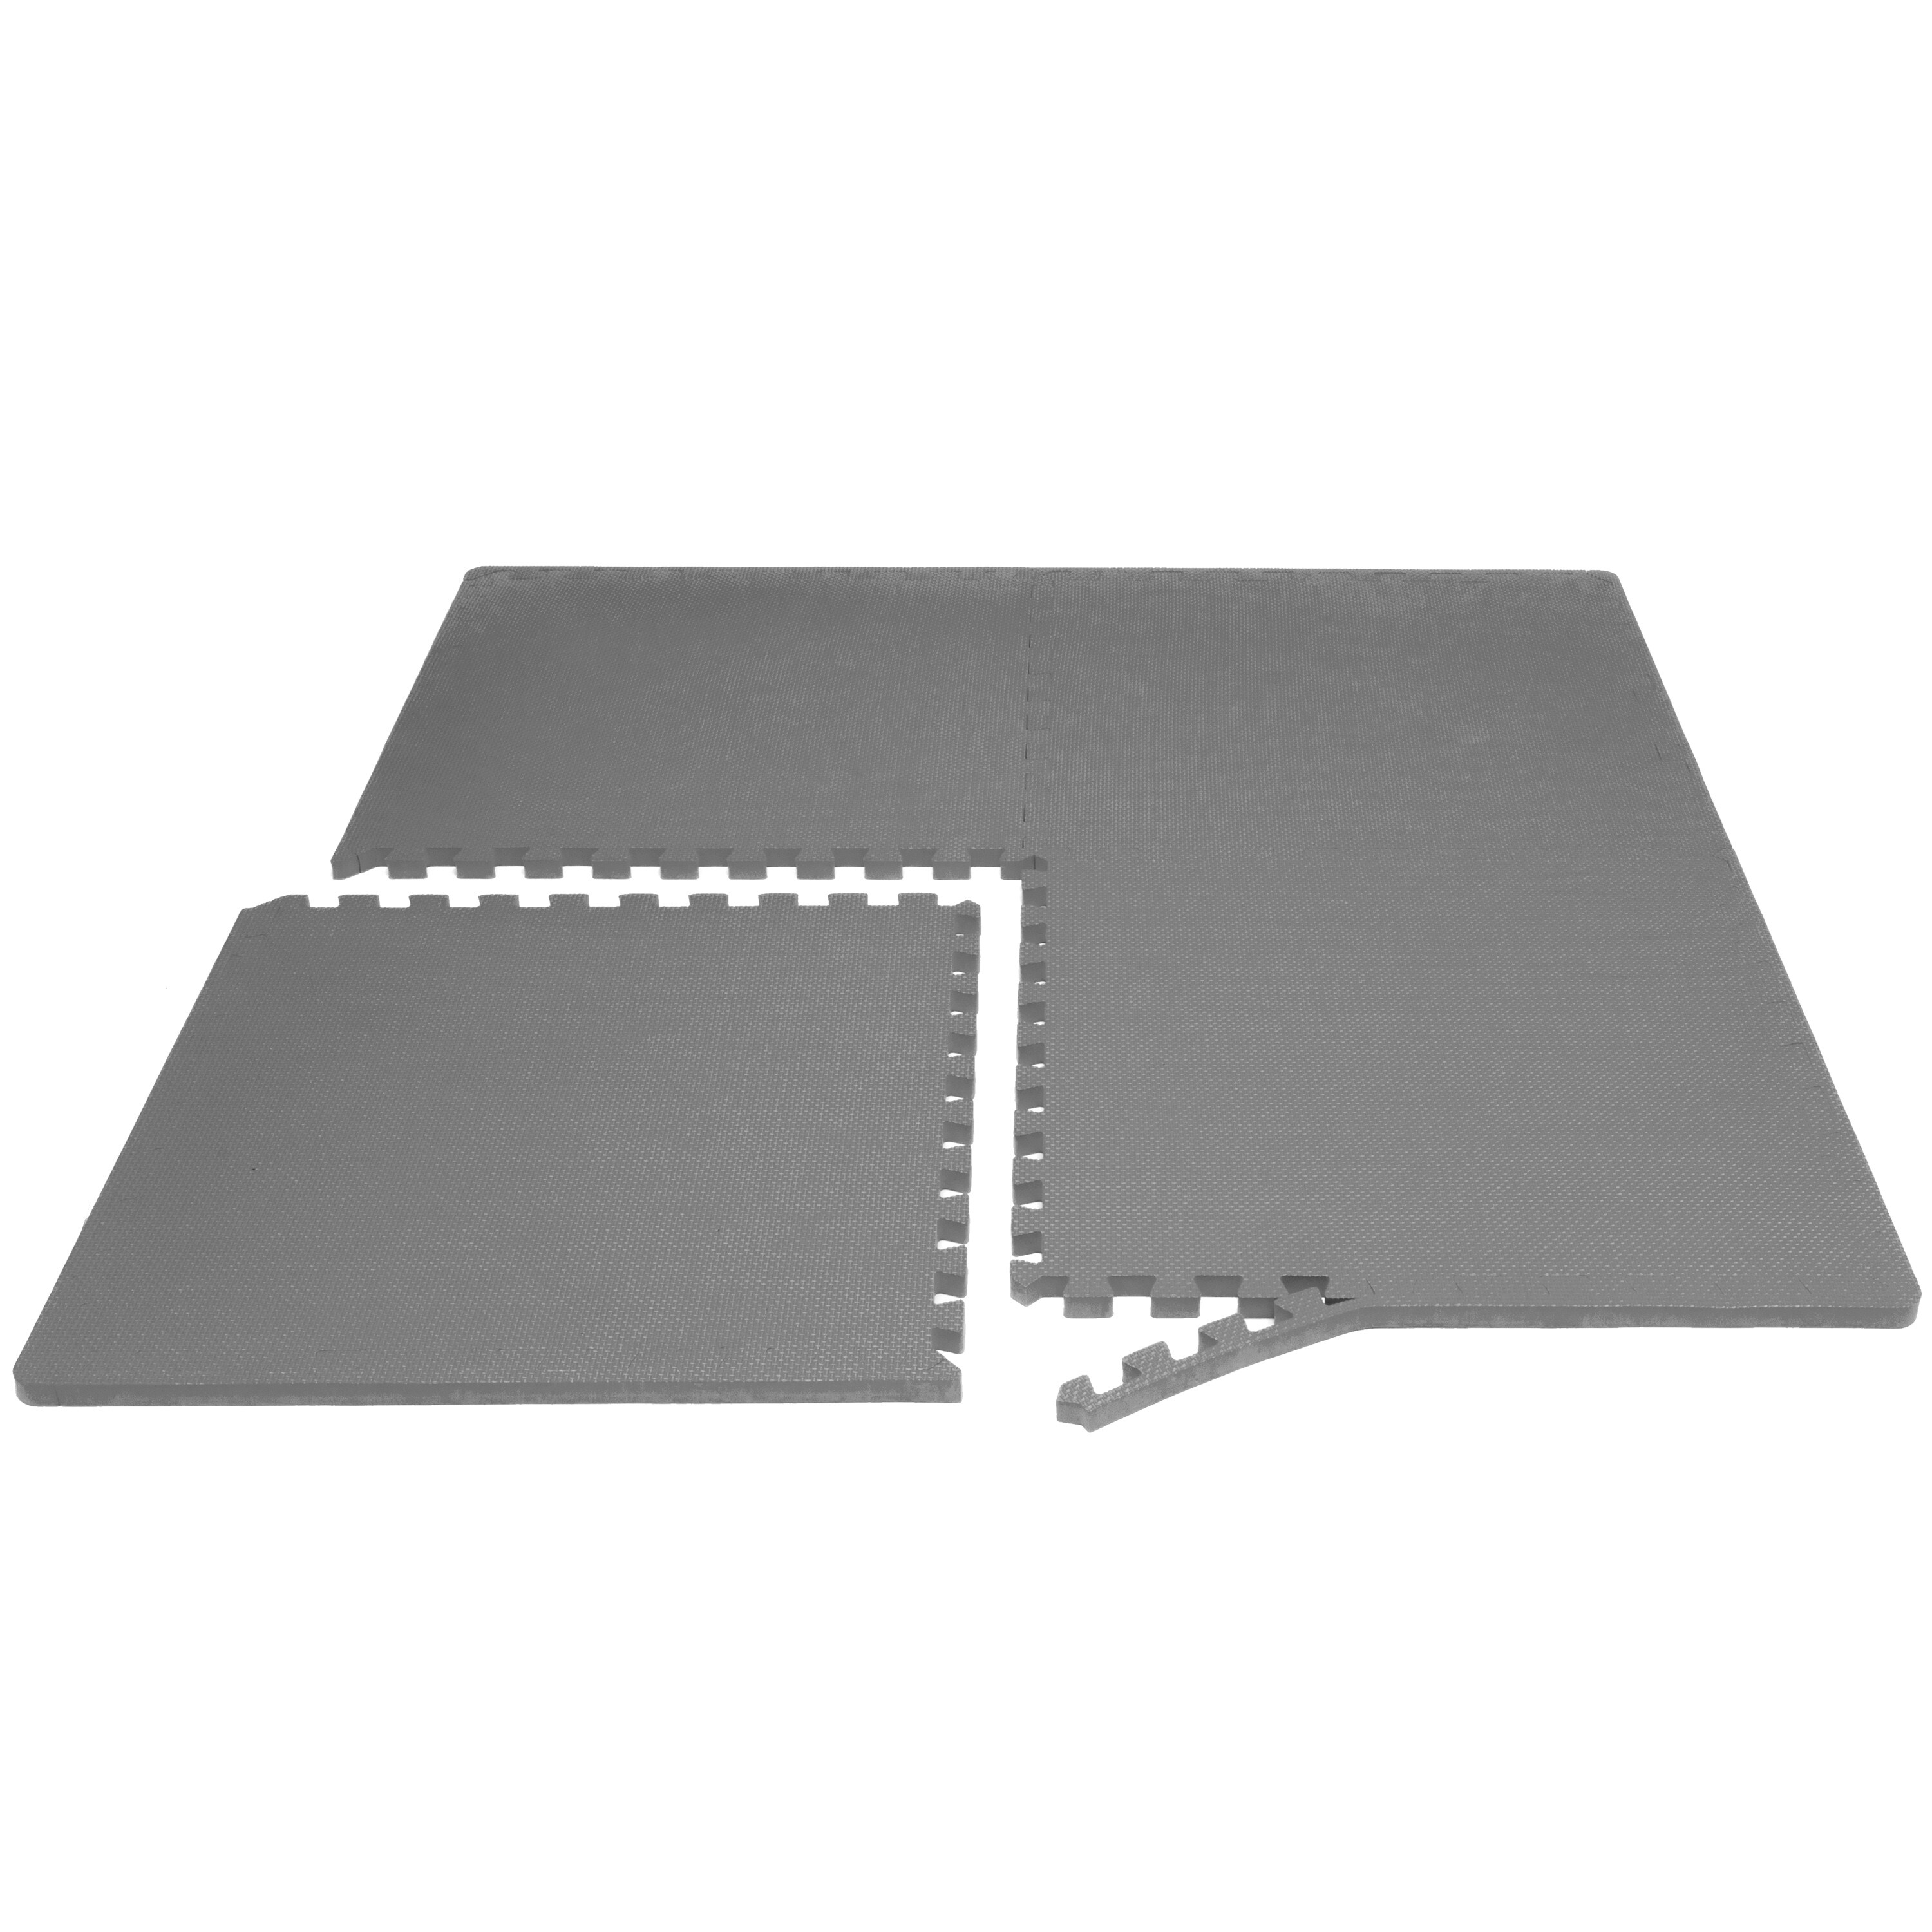 ProsourceFit Grey 24-in x 0.75-in Interlocking Foam Tile Gym 